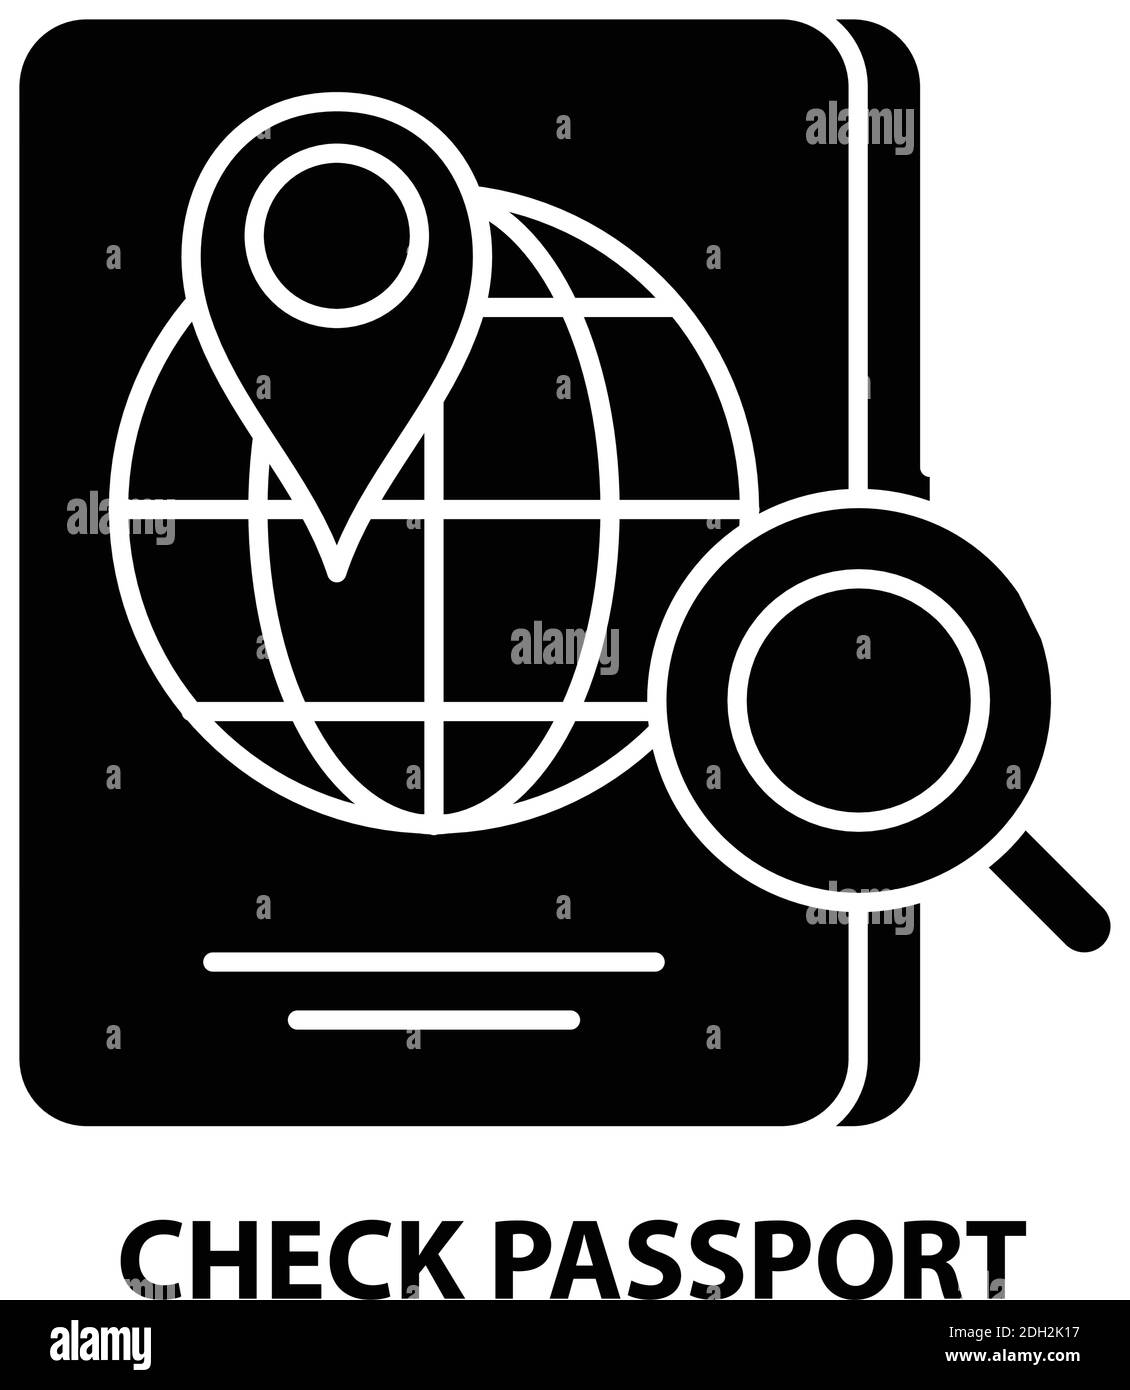 check passport icon, black vector sign with editable strokes, concept illustration Stock Vector